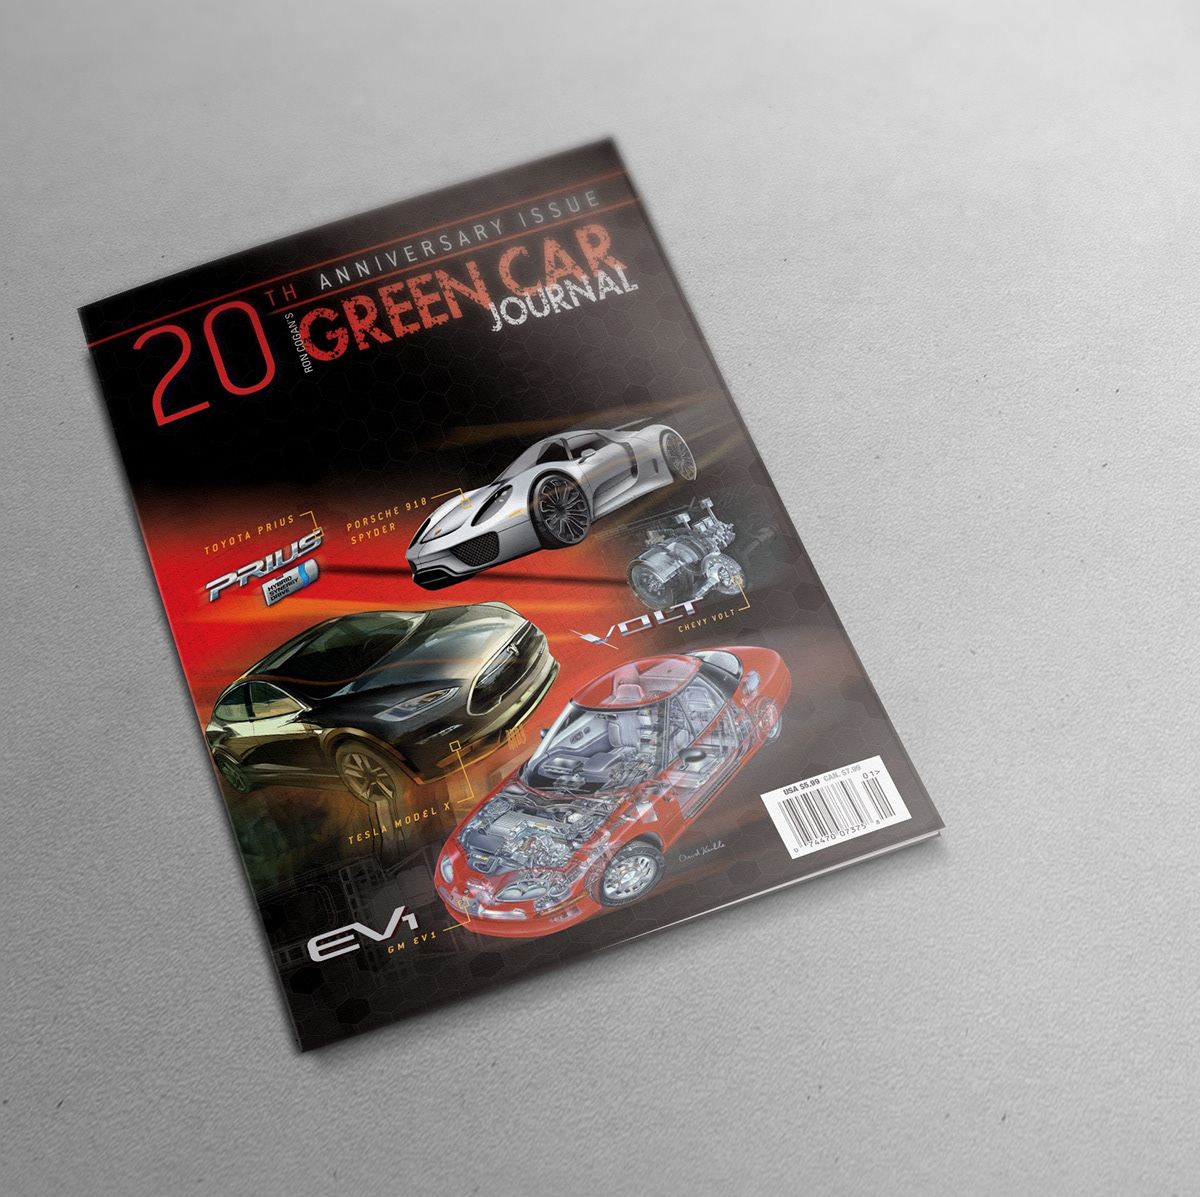 Ron Cogan Green car journal 20th twentieth anniversary issue jonathan tipton-king cover hybrid prius car tesla ev-1 Chevy Volt design